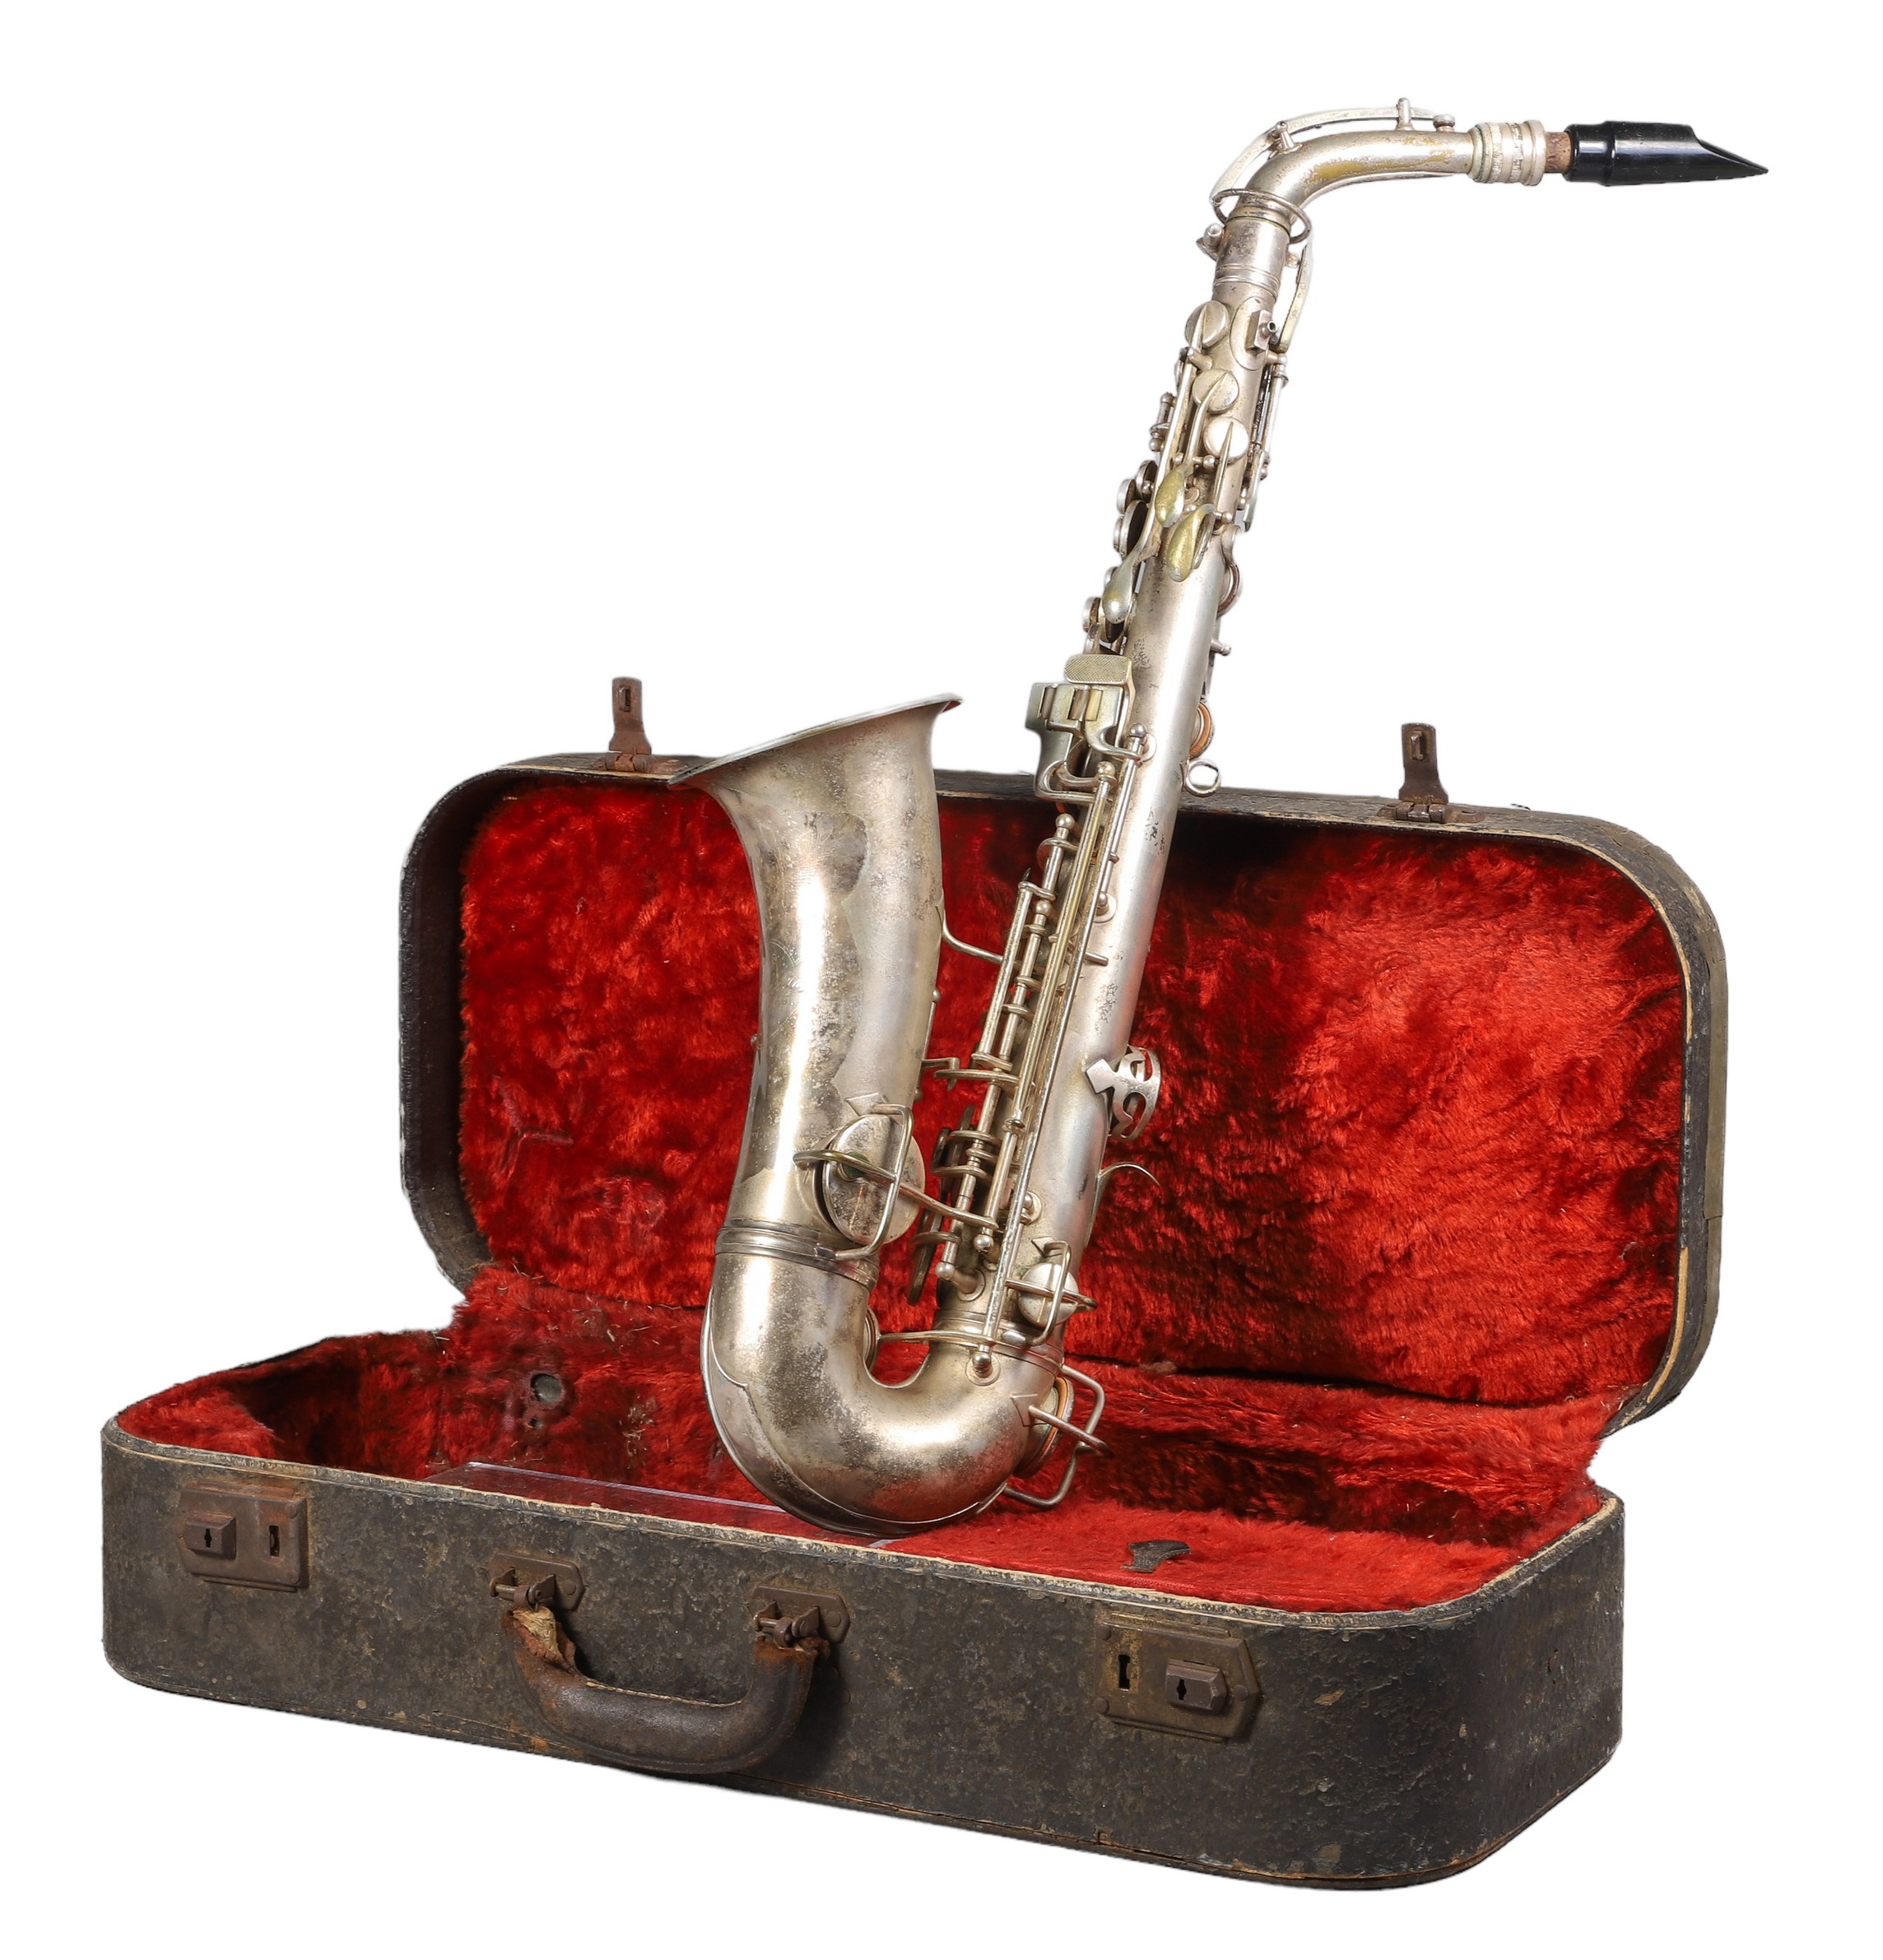 CG Conn silver plate saxophone, Patd